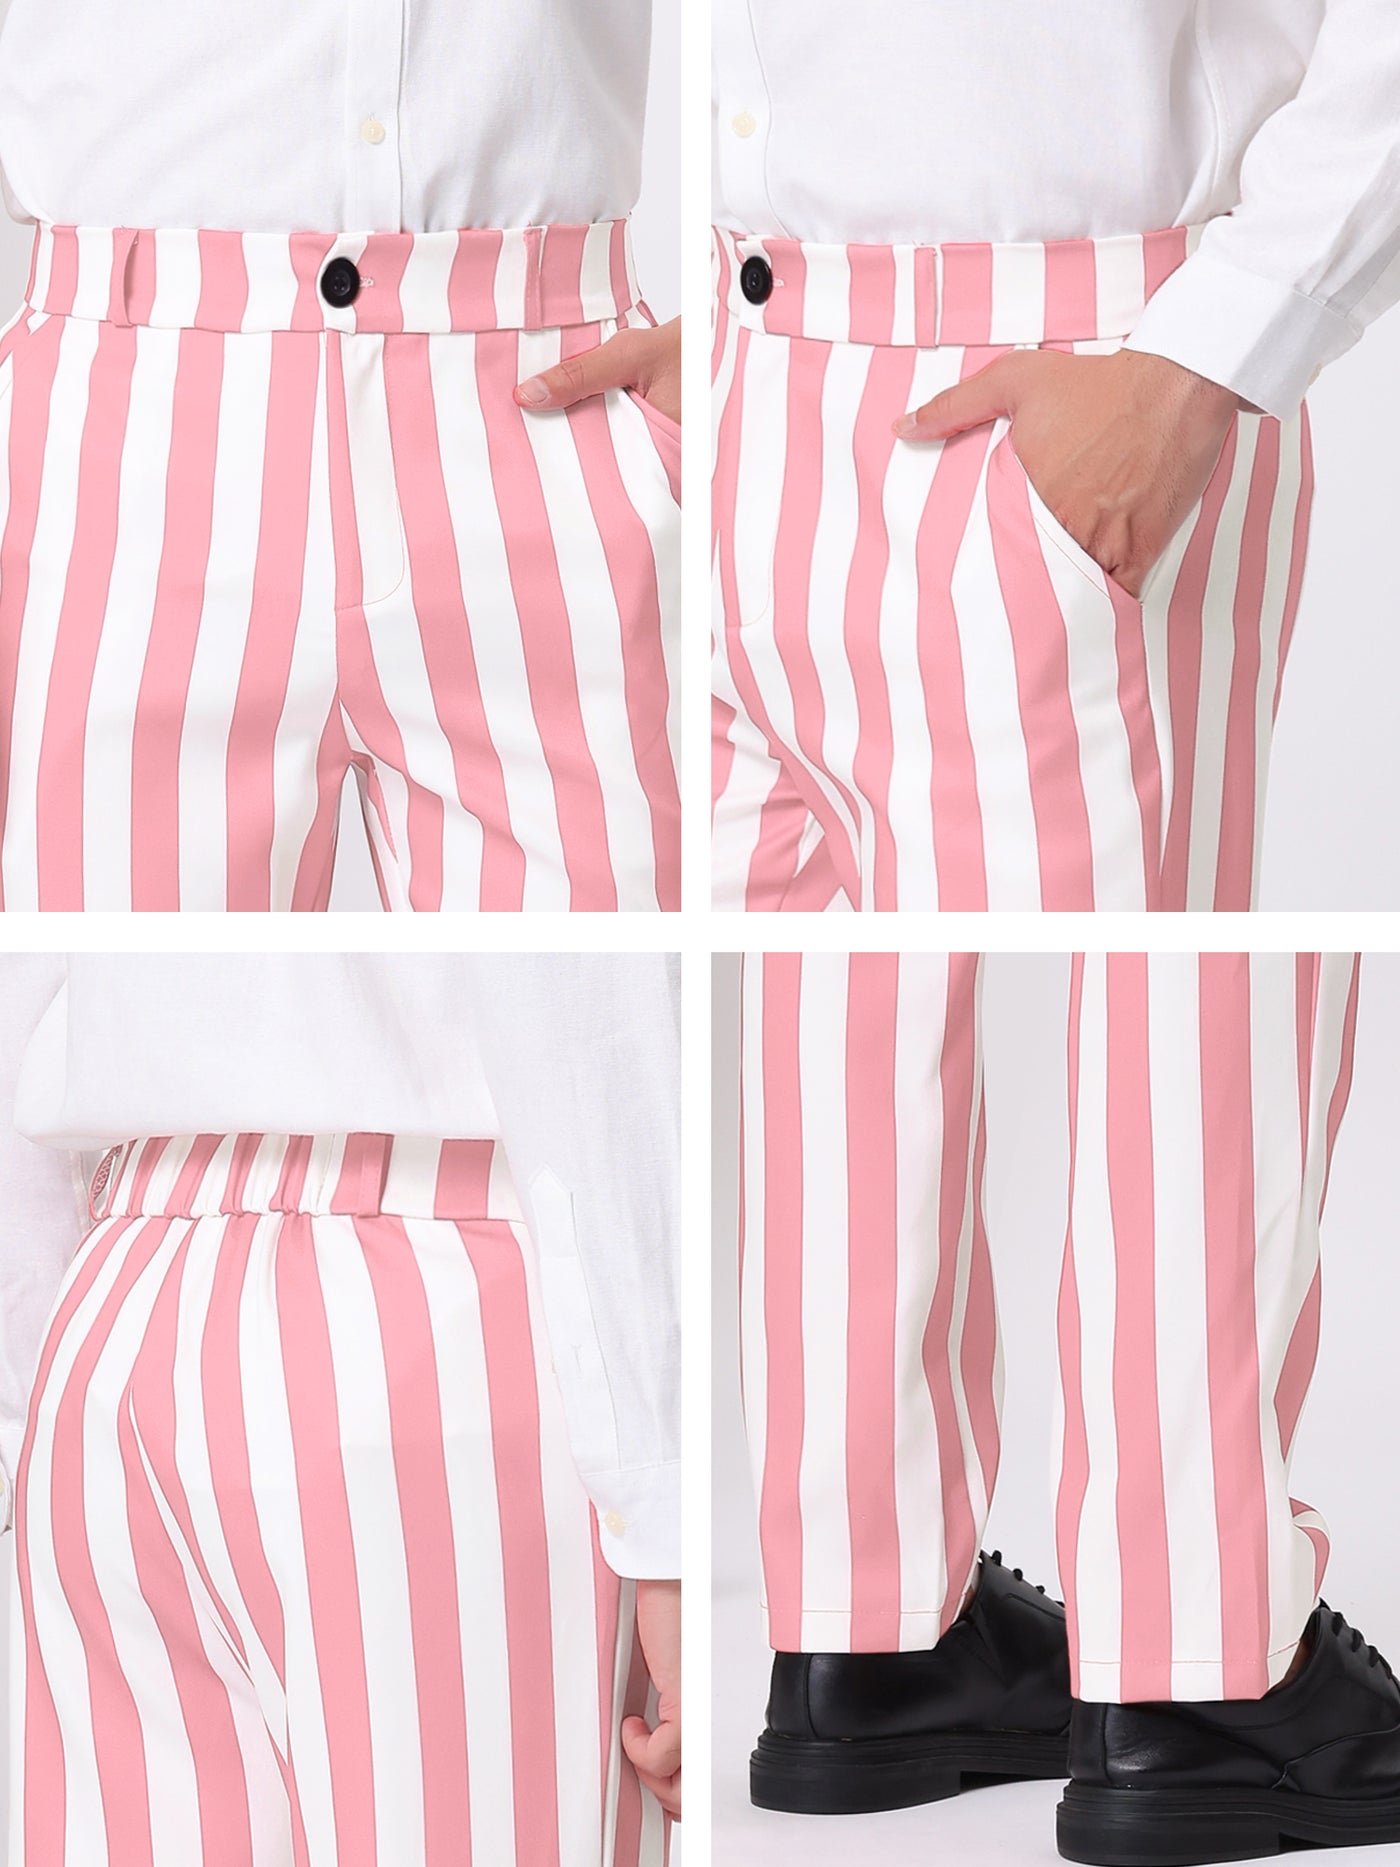 Bublédon Casual Skinny Color Block Pencil Dress Striped Pants